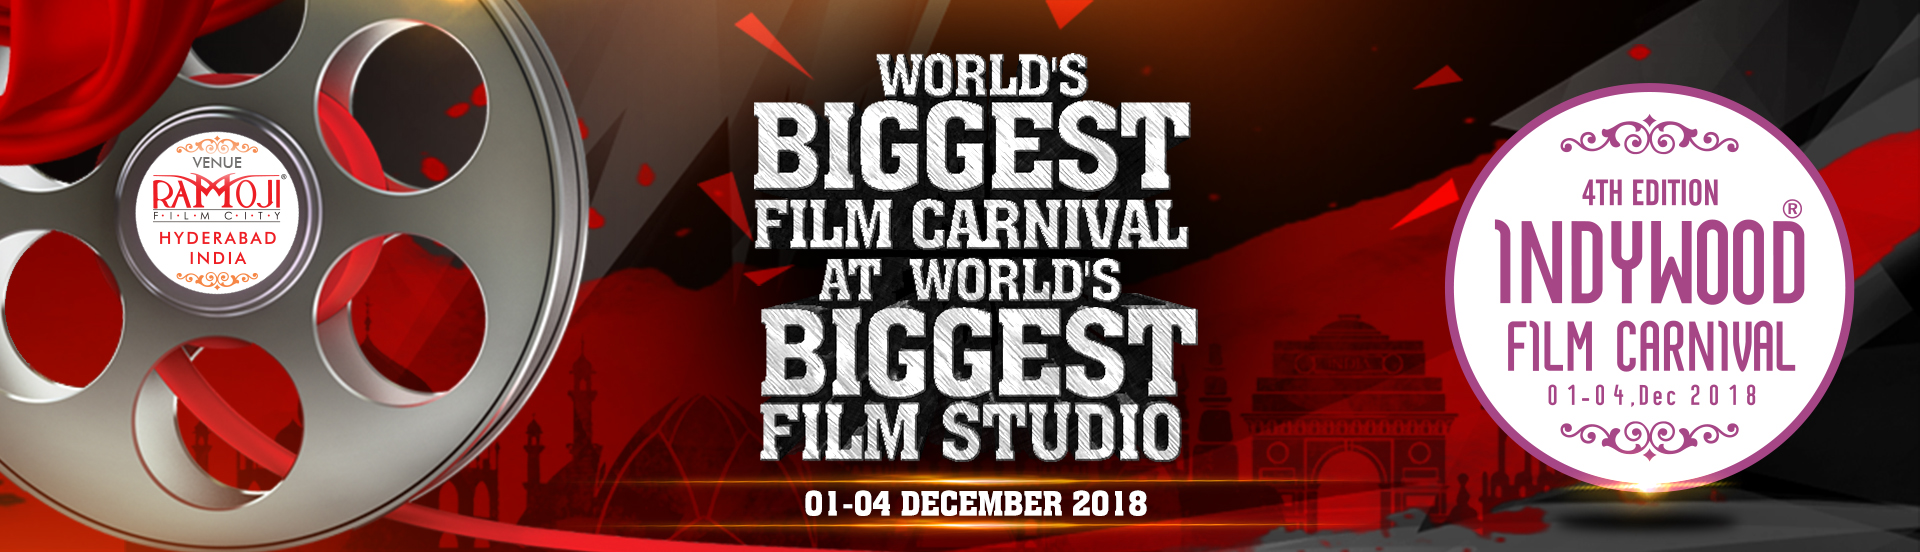 indywood-film-carnival-film-festival-india-home-banner.jpg